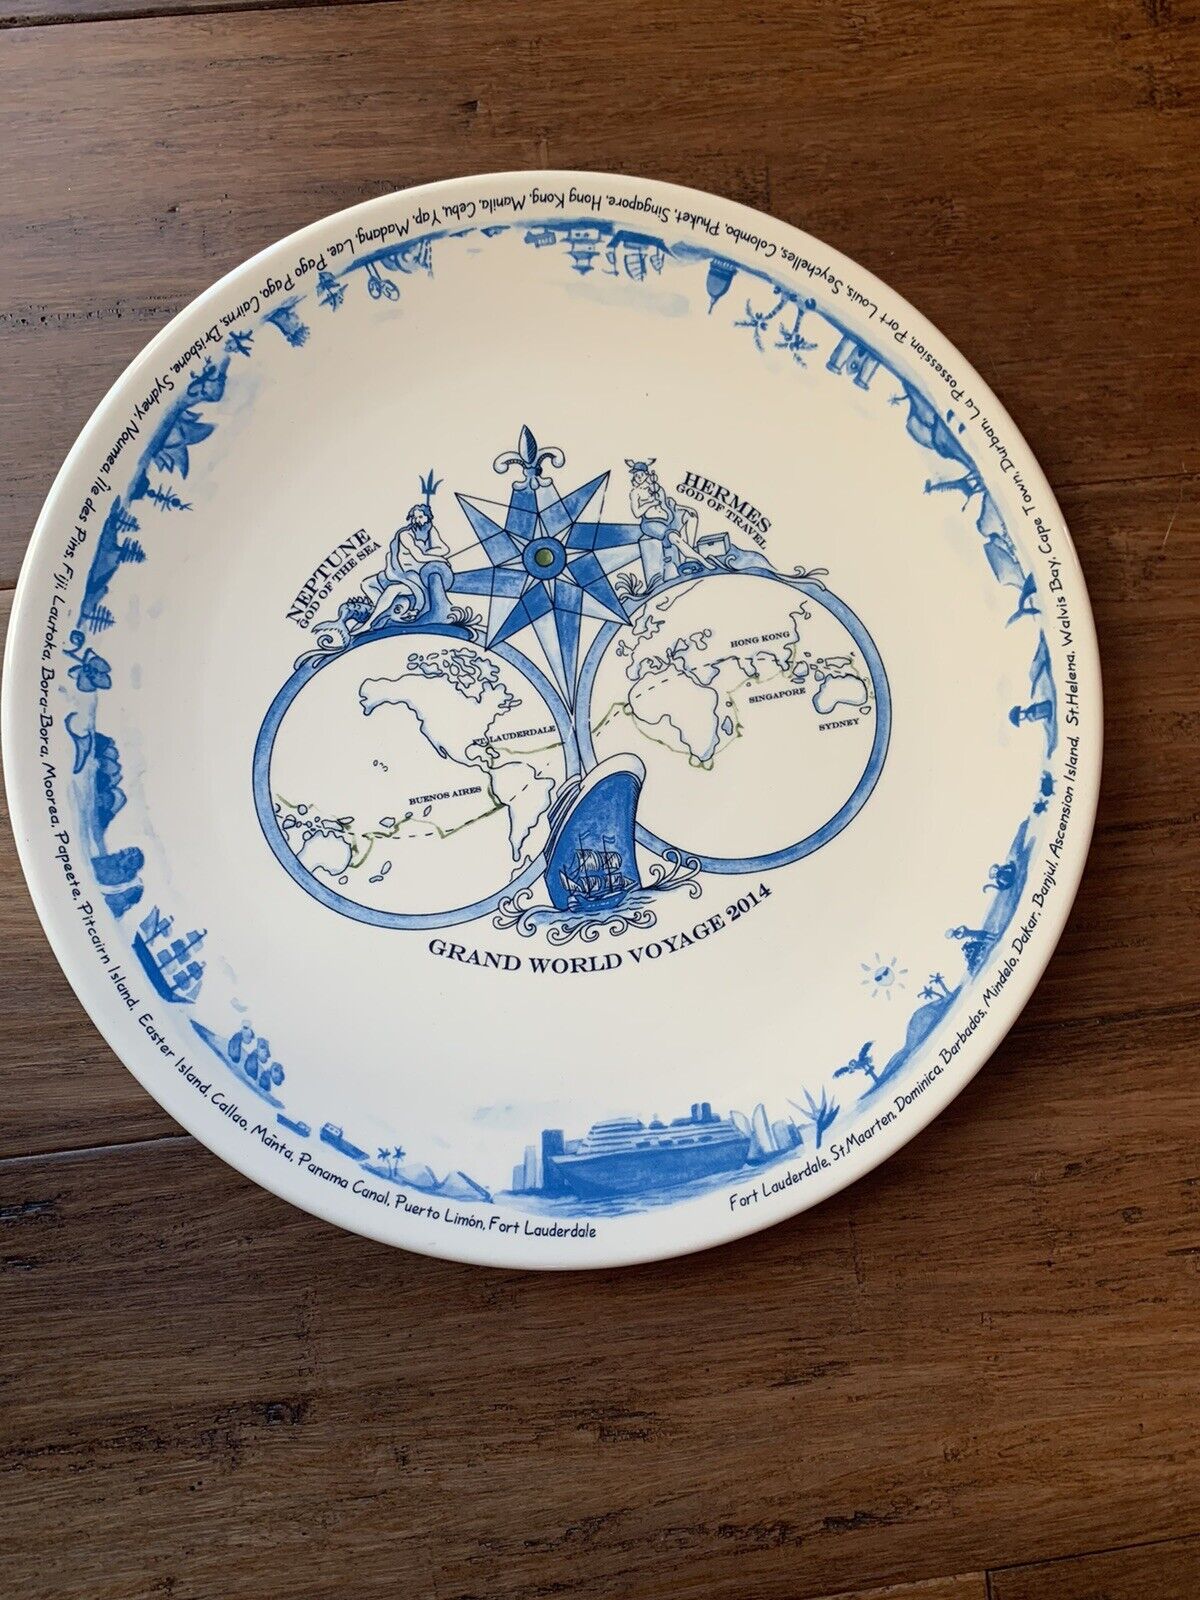 Holland America Grand World Voyage 2014 Souvenir Royal Goedewaagen Plate